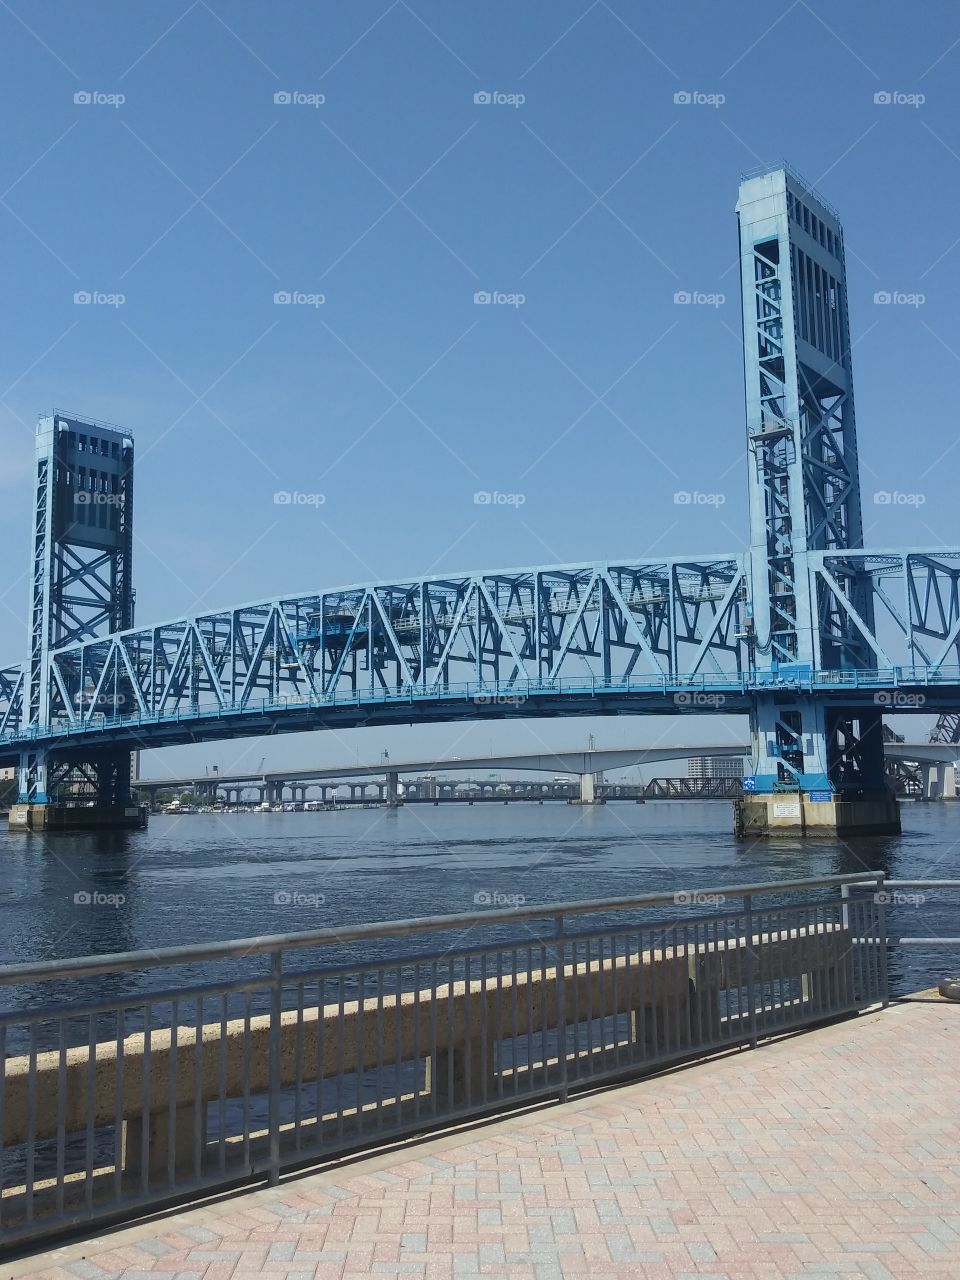 The Main Street Bridge Jacksonville Florida spanning the St.Johns River